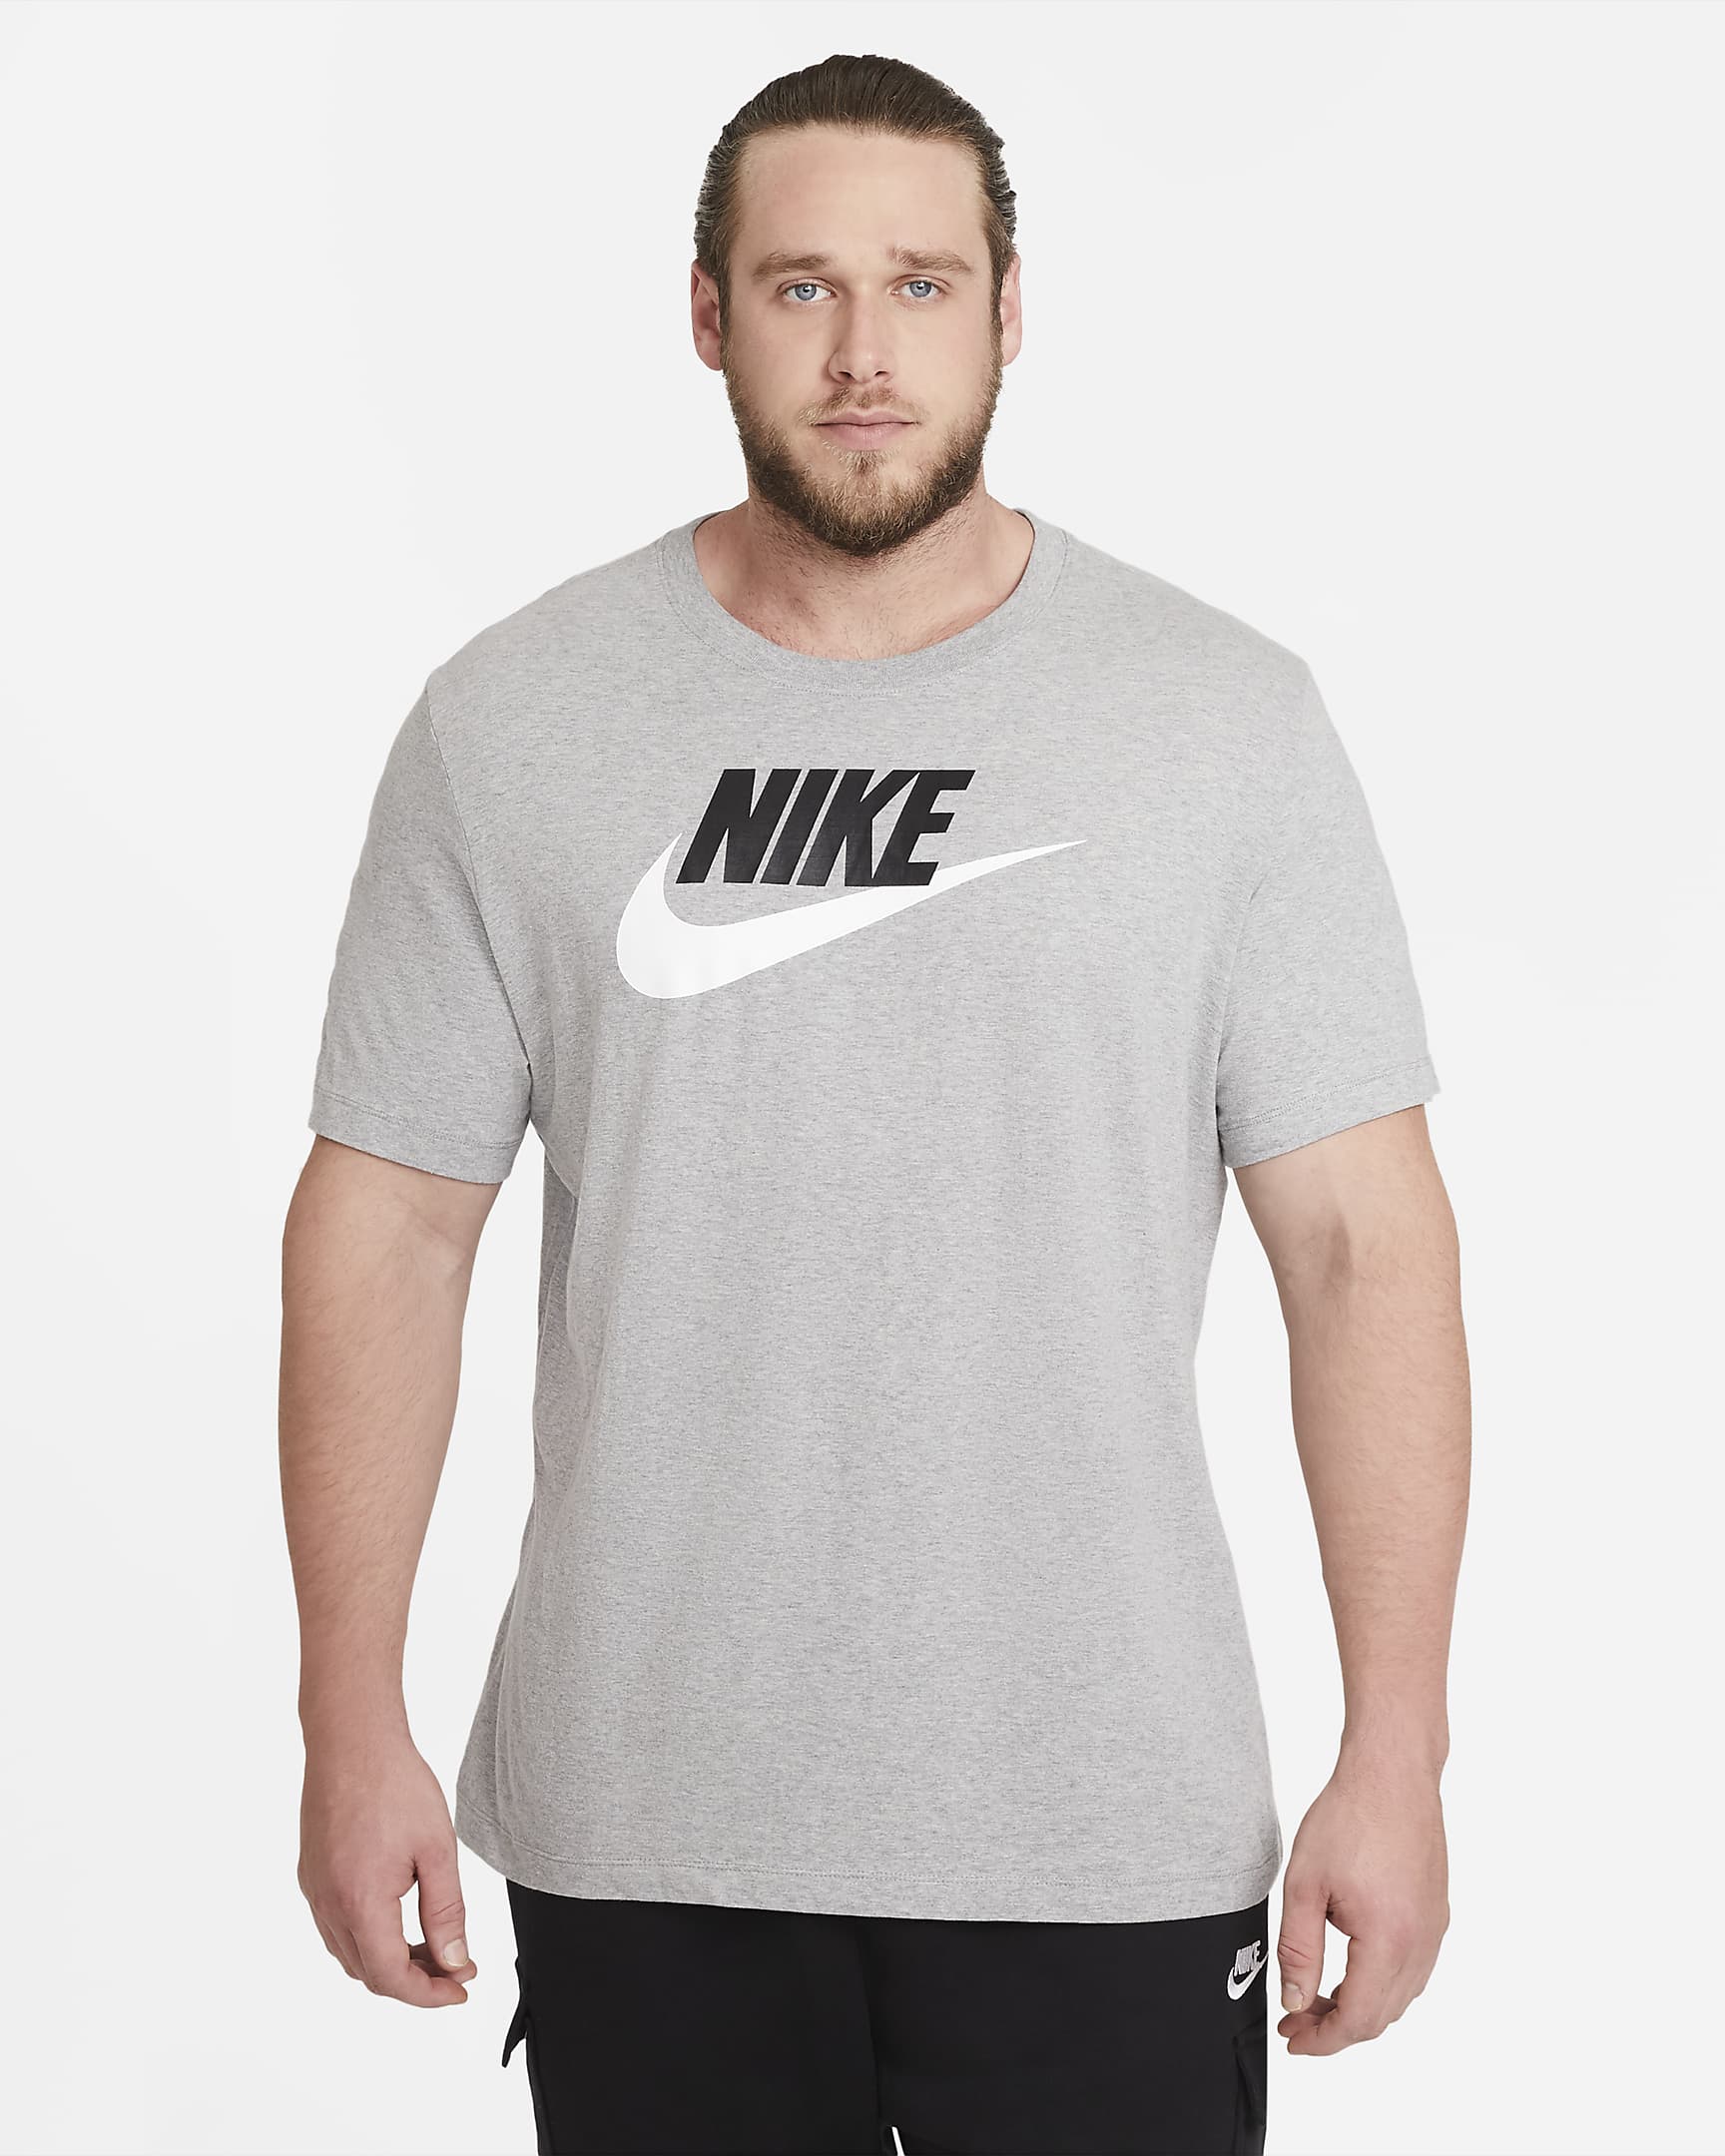 Nike Sportswear Men's T-Shirt - Dark Grey Heather/Black/White